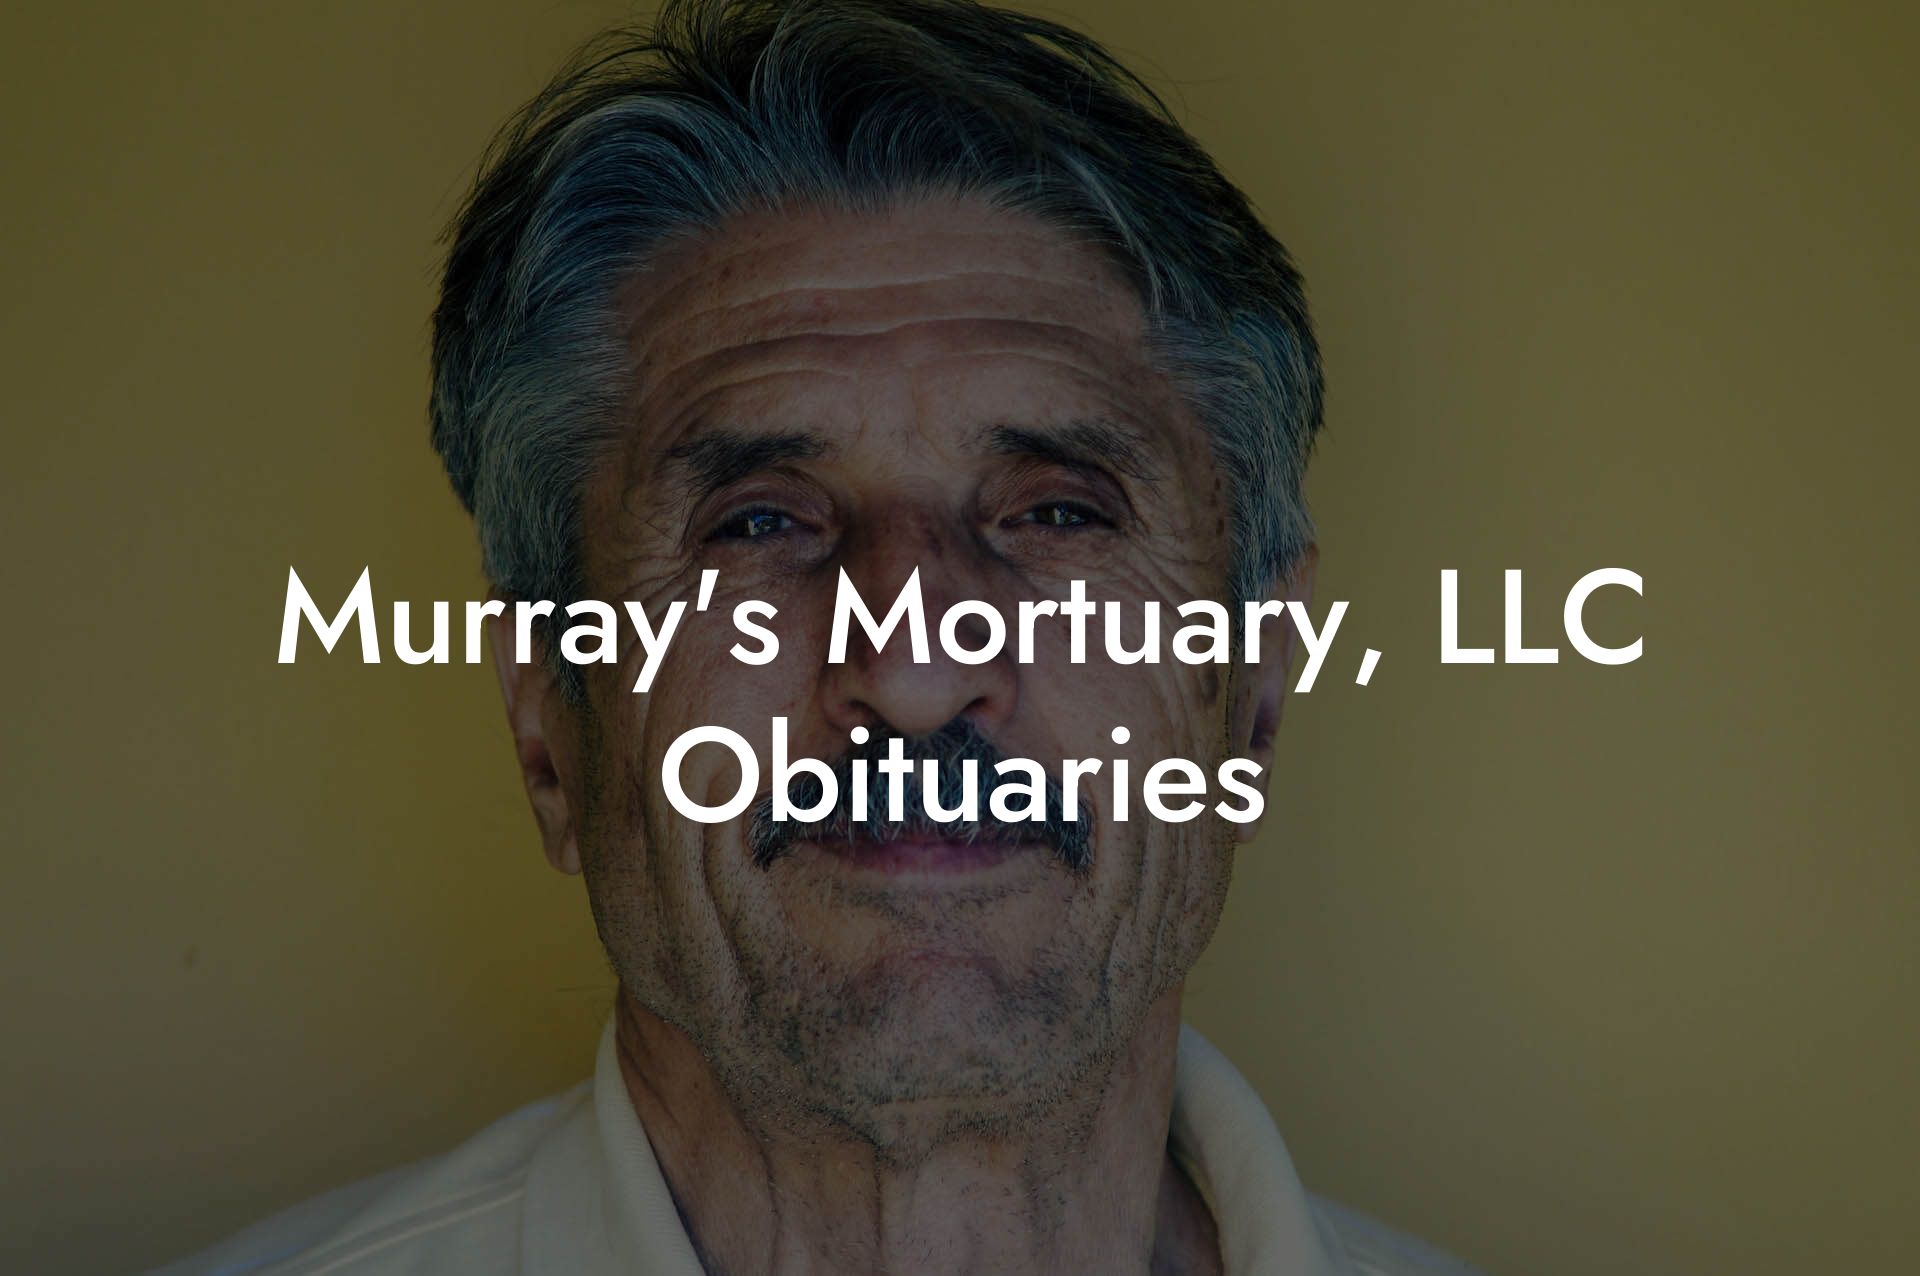 Murray's Mortuary, LLC Obituaries